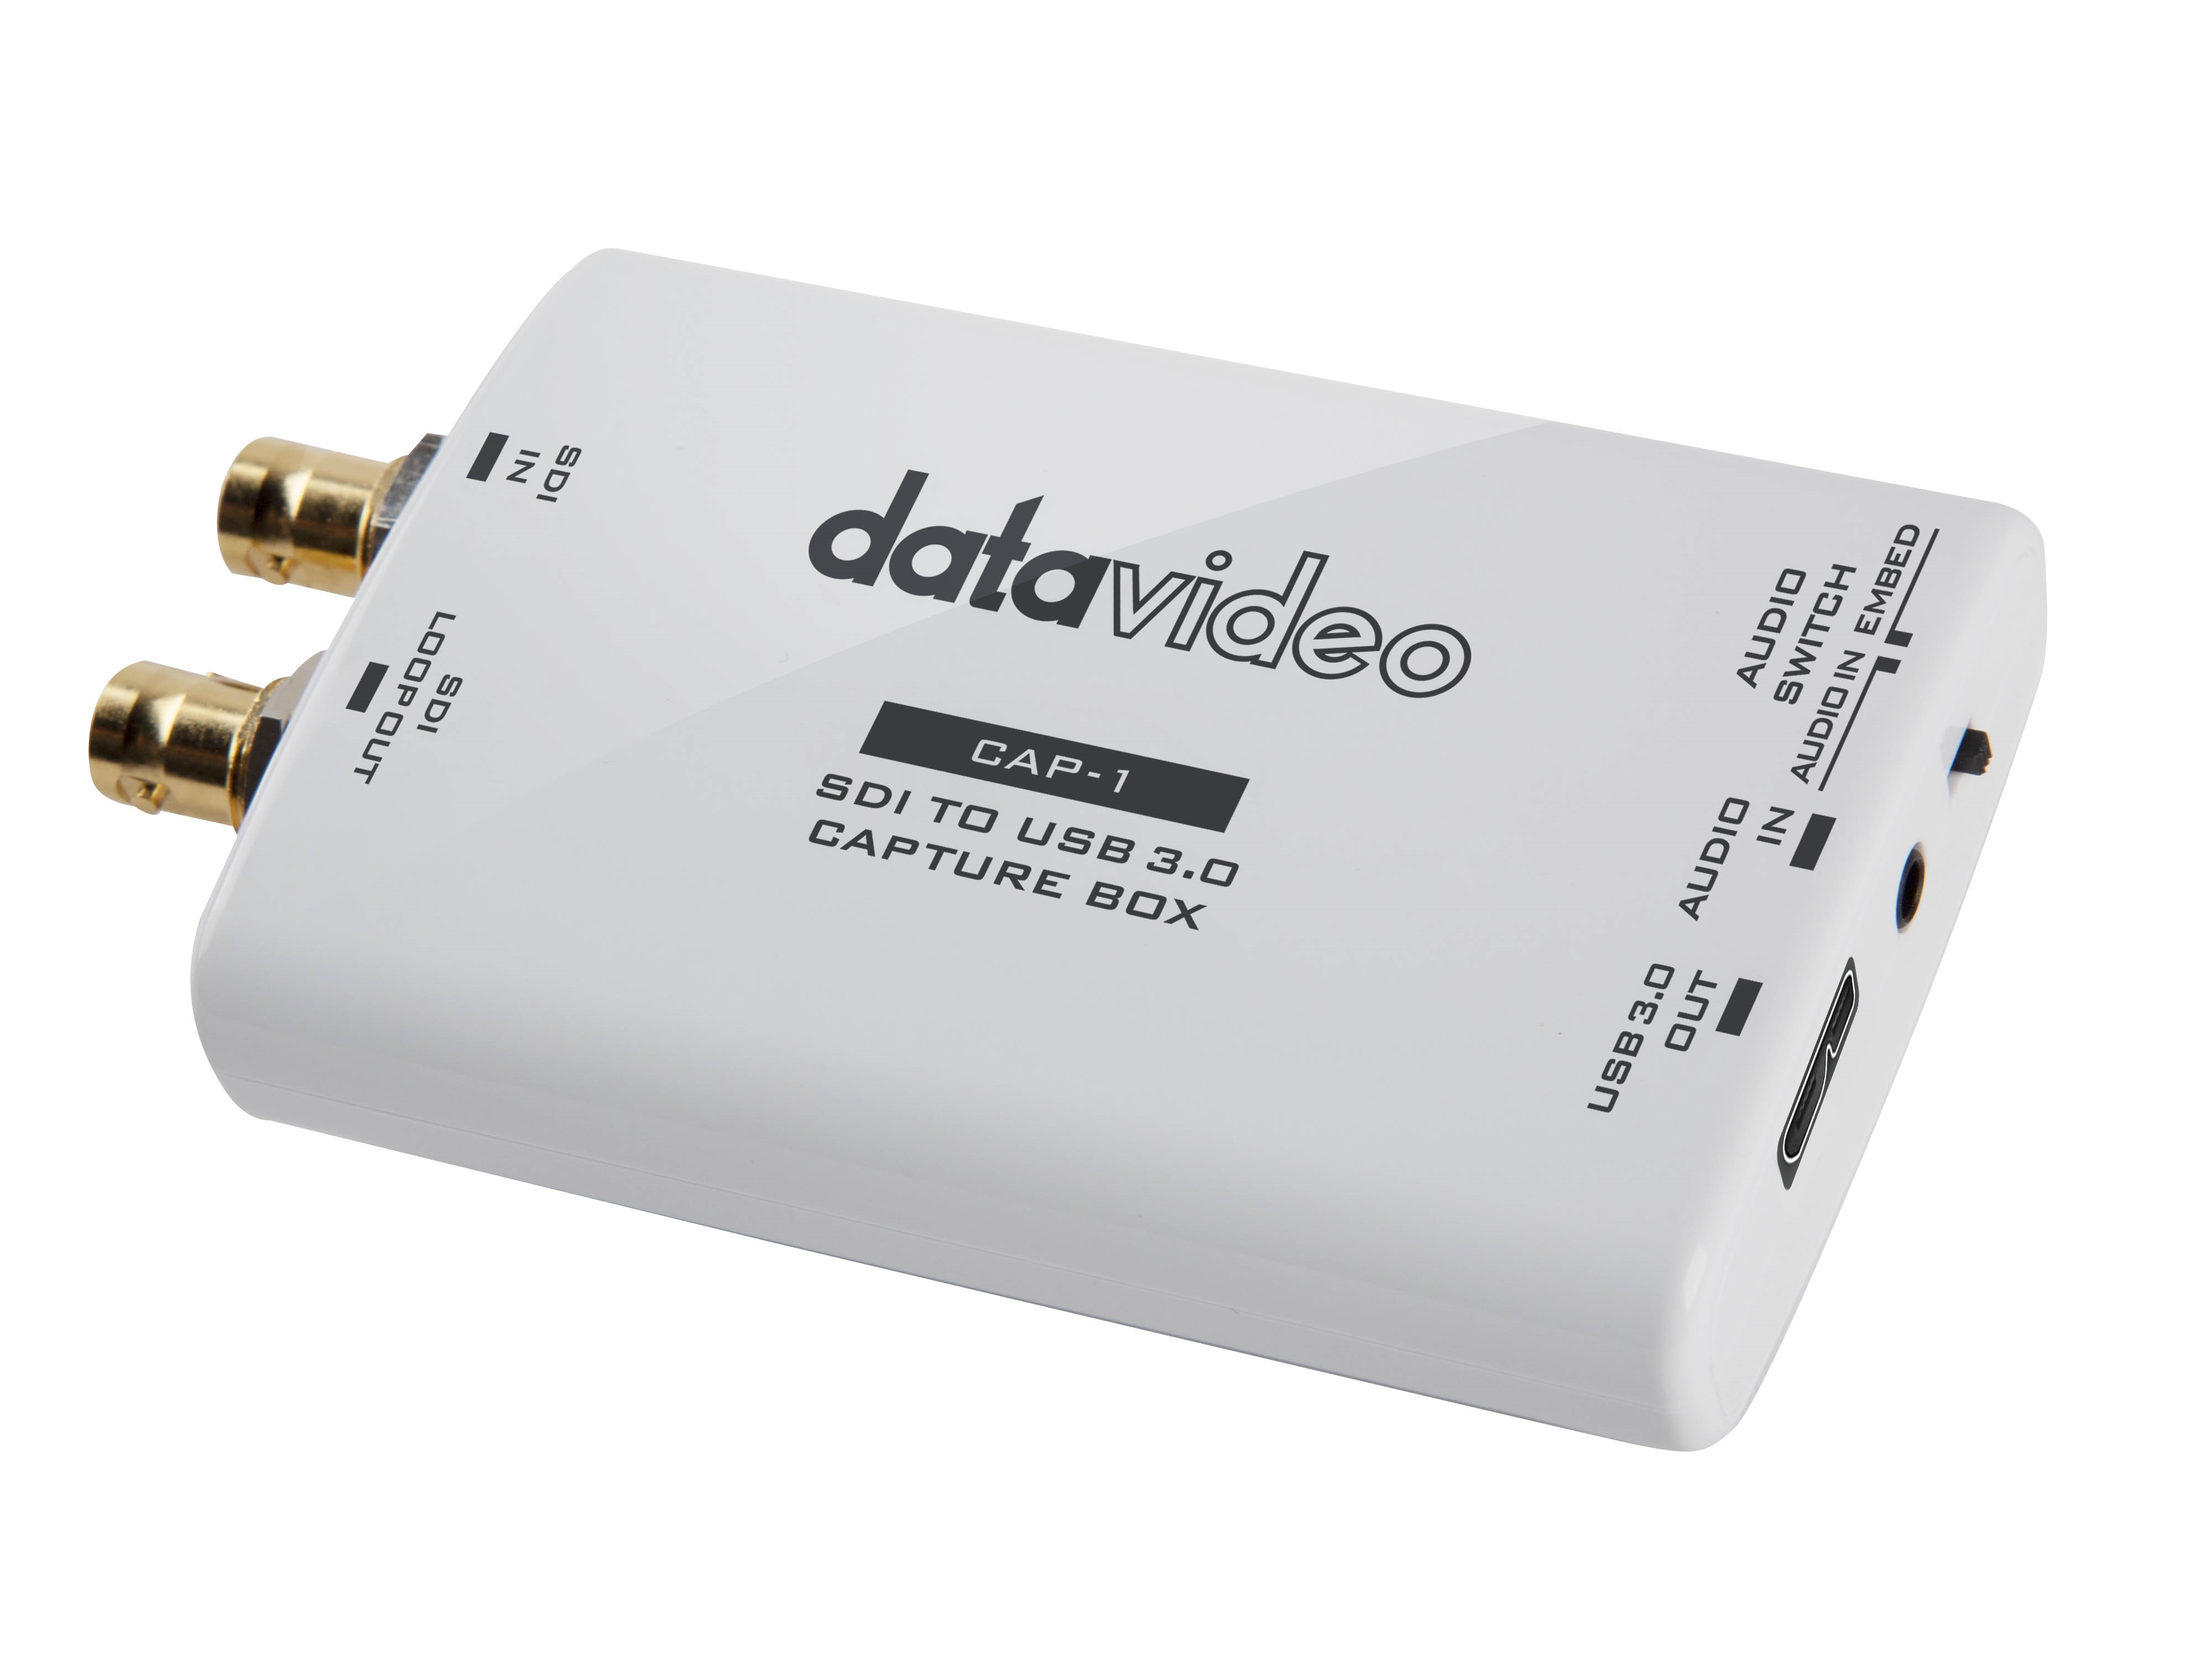 Datavideo CAP-1 SDI to USB 3.0 Capture Box